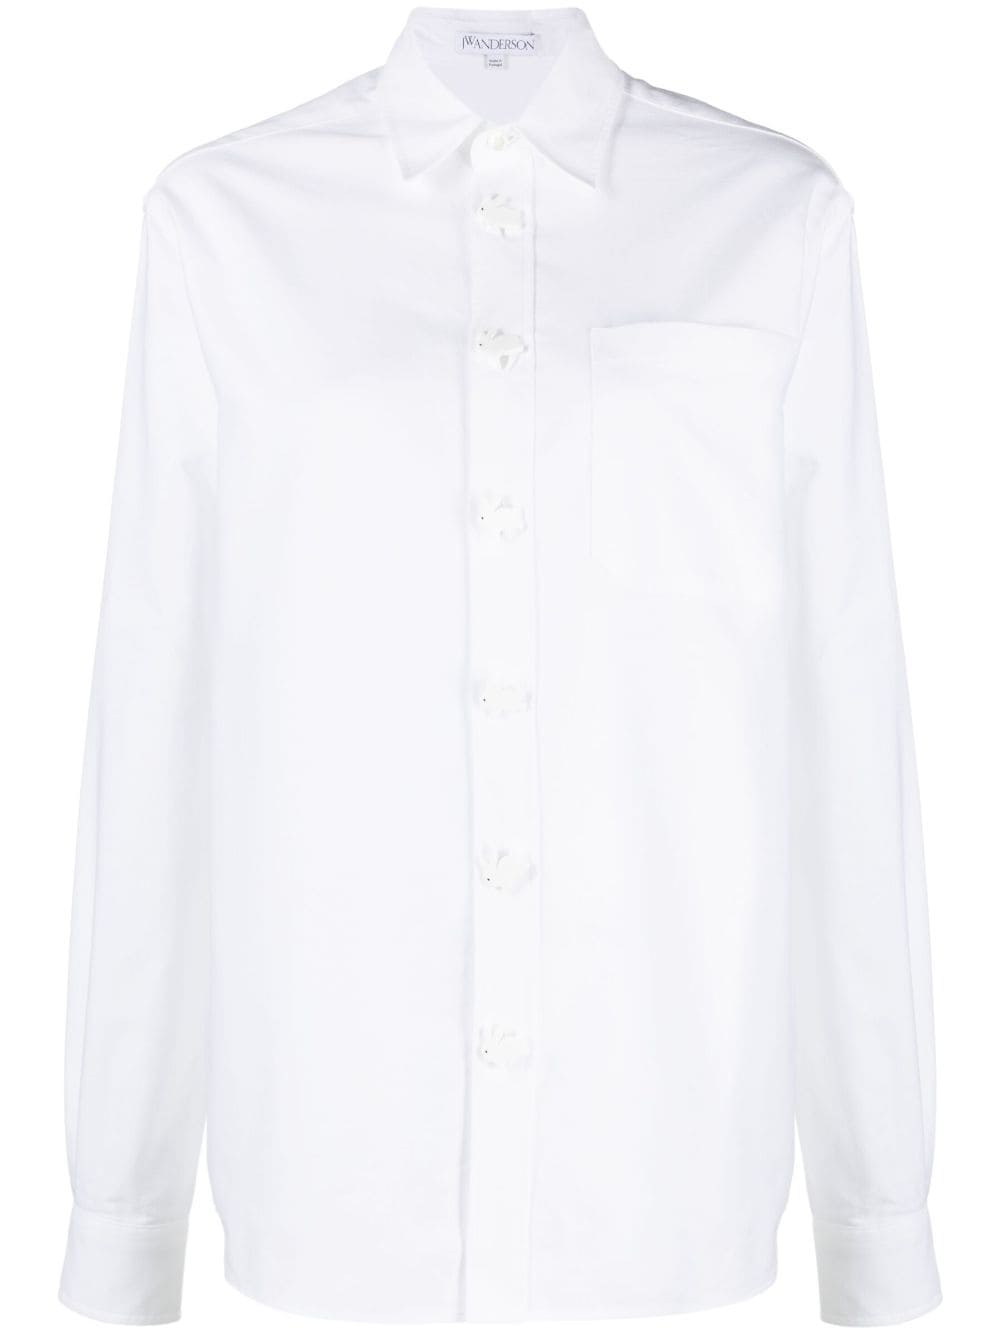 JW Anderson rabit-buttons cotton shirt - White